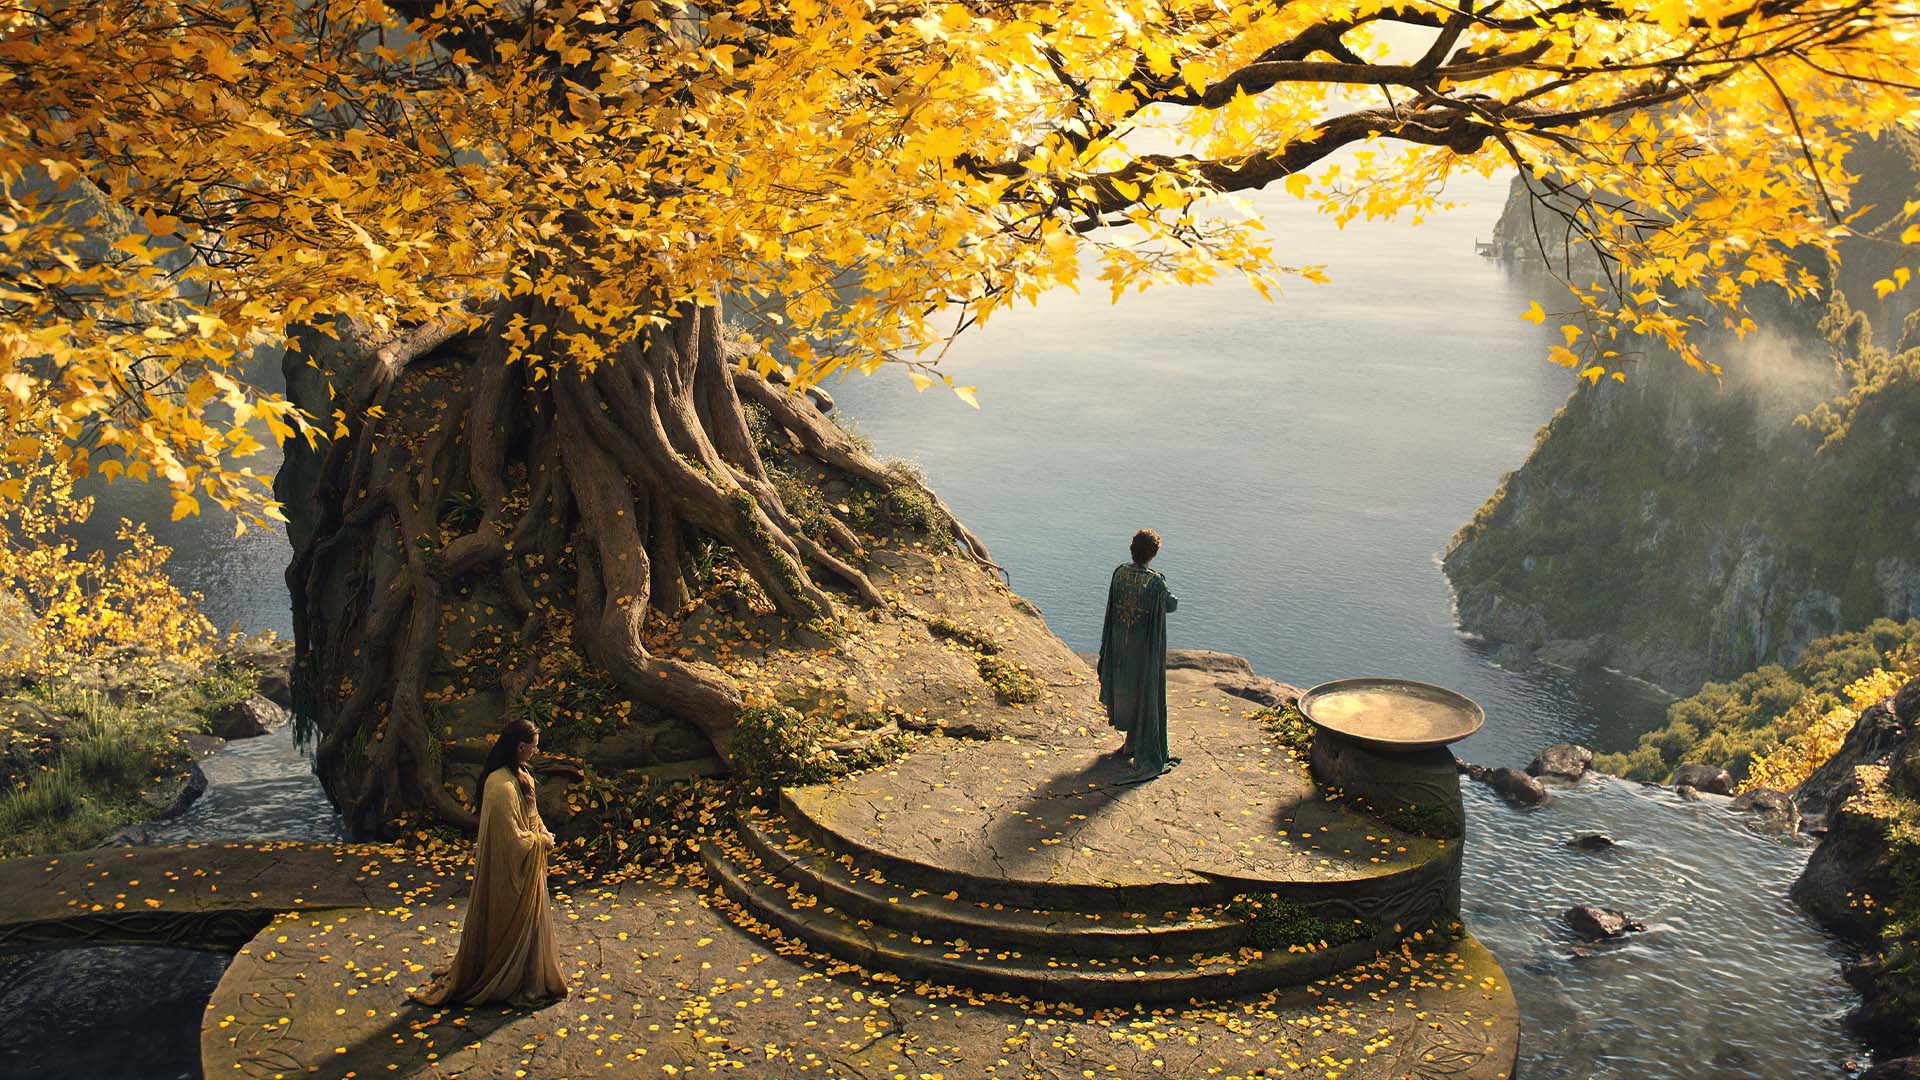 The Lord Of The Rings Rings Of Power TV Series Film Stills Water Leaves Rocks Trees 1920x1080